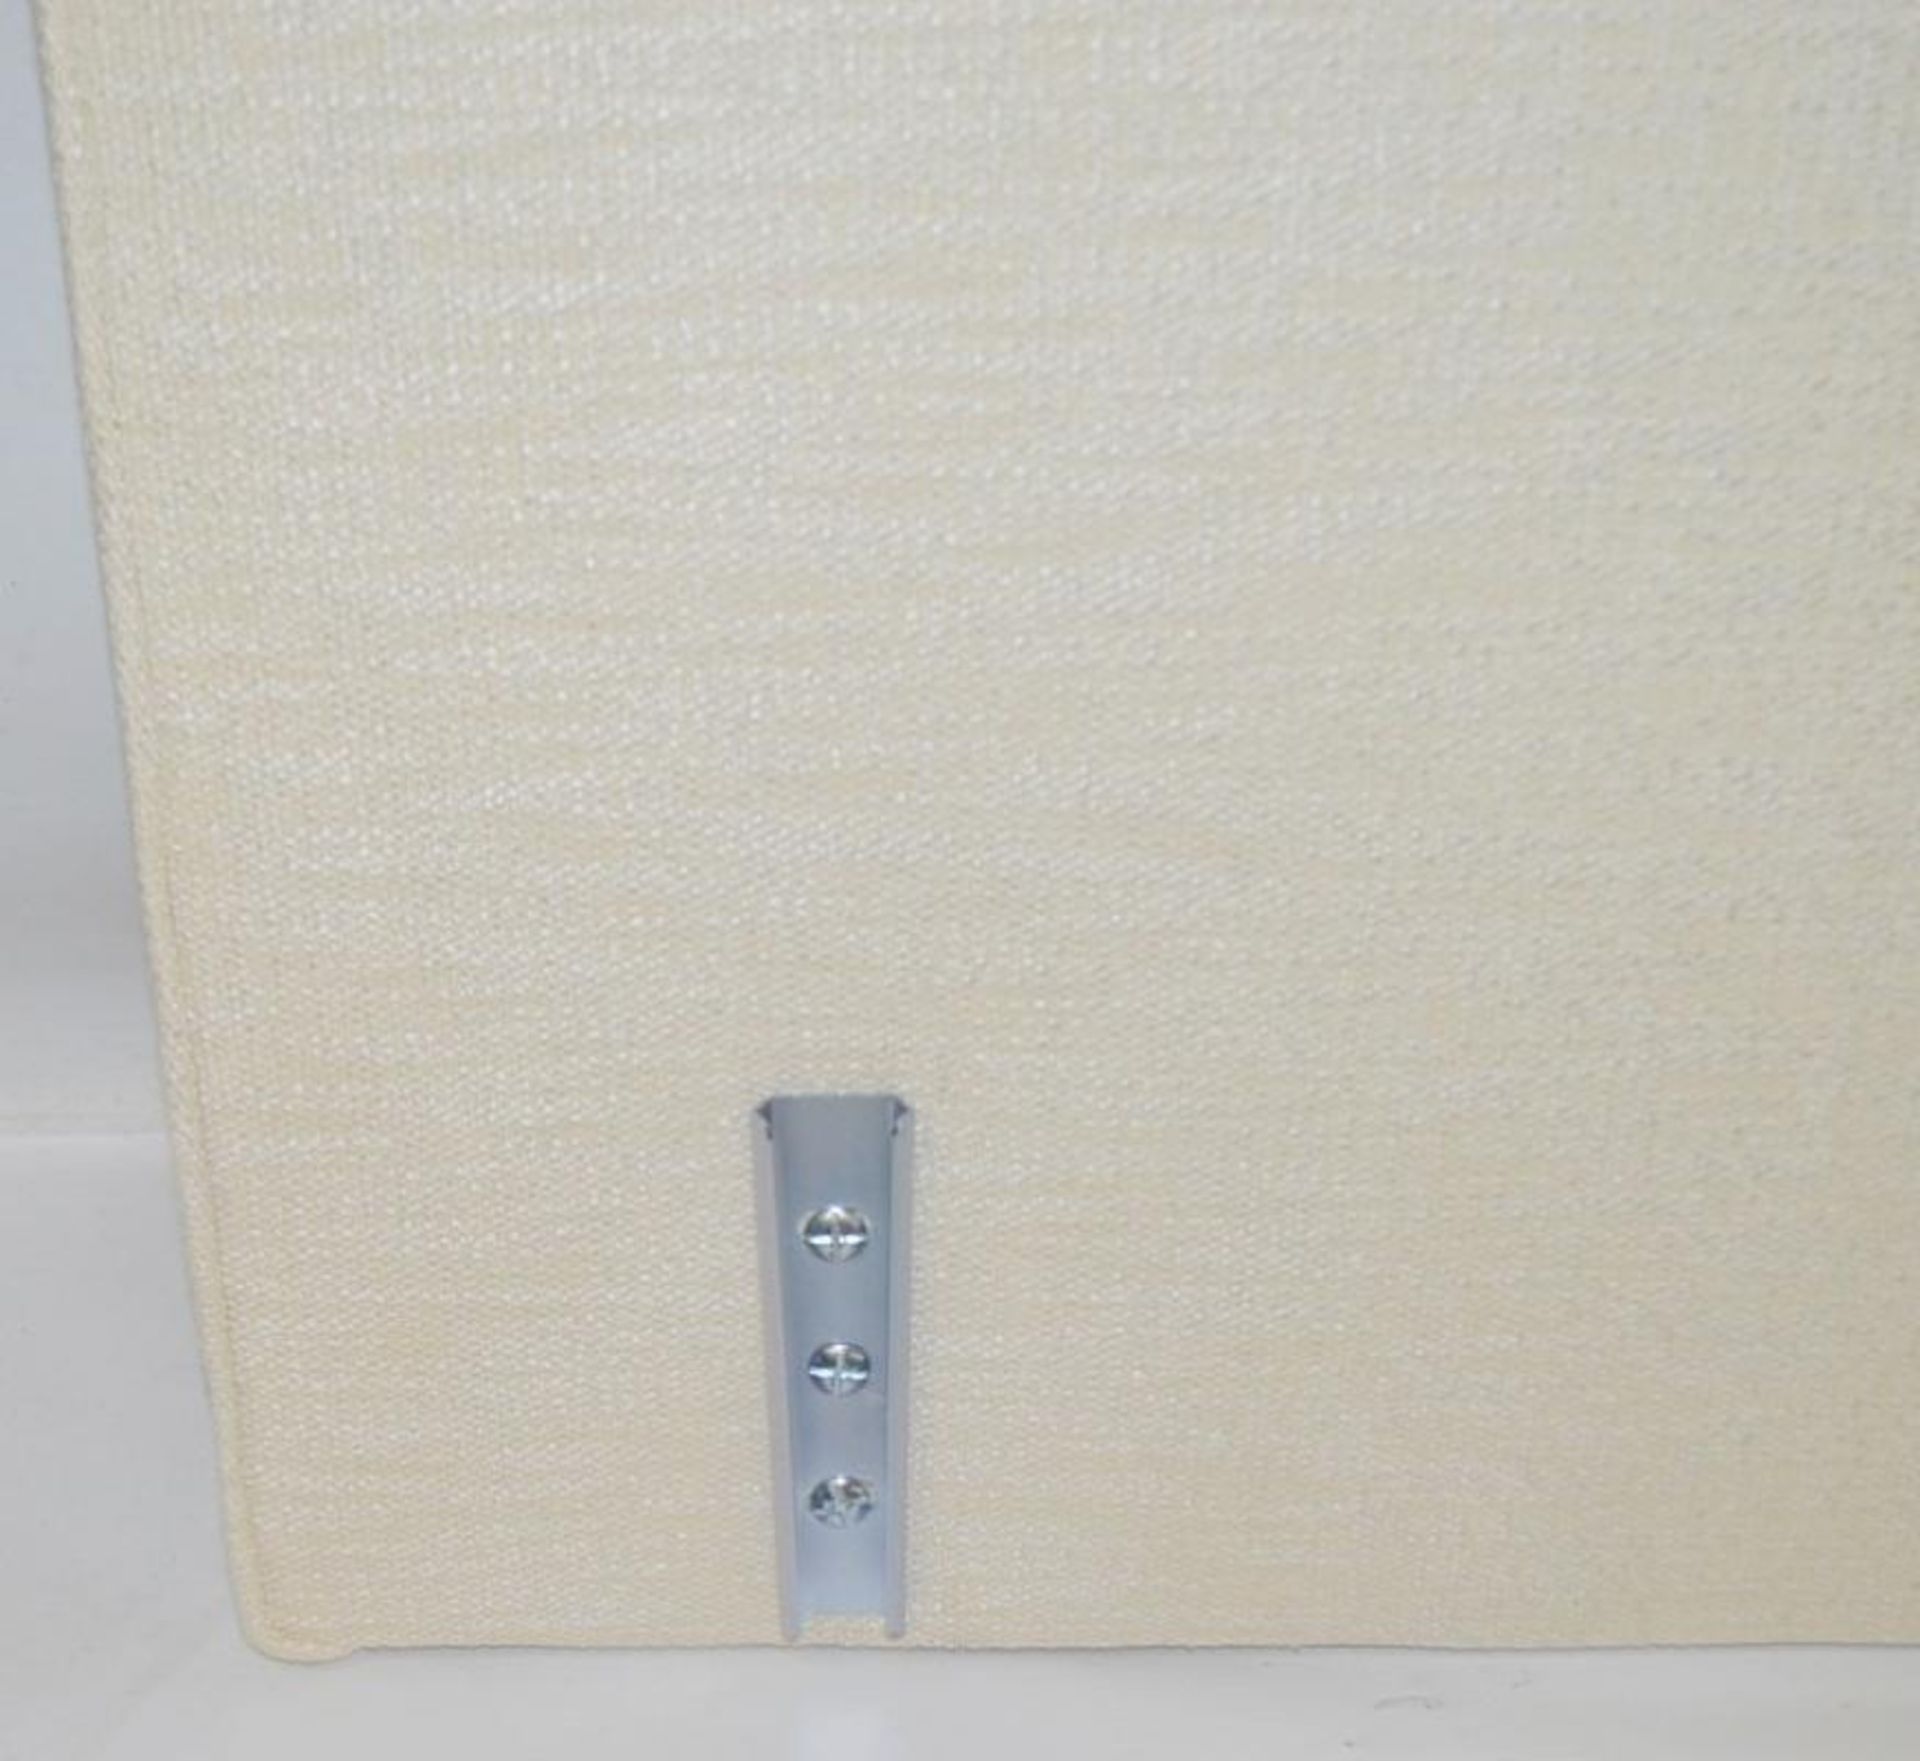 1 x VISPRING 'Eccleston' Luxury King Size Upholsted Headboard In A Premium Light Cream Fabric - Hand - Image 4 of 5